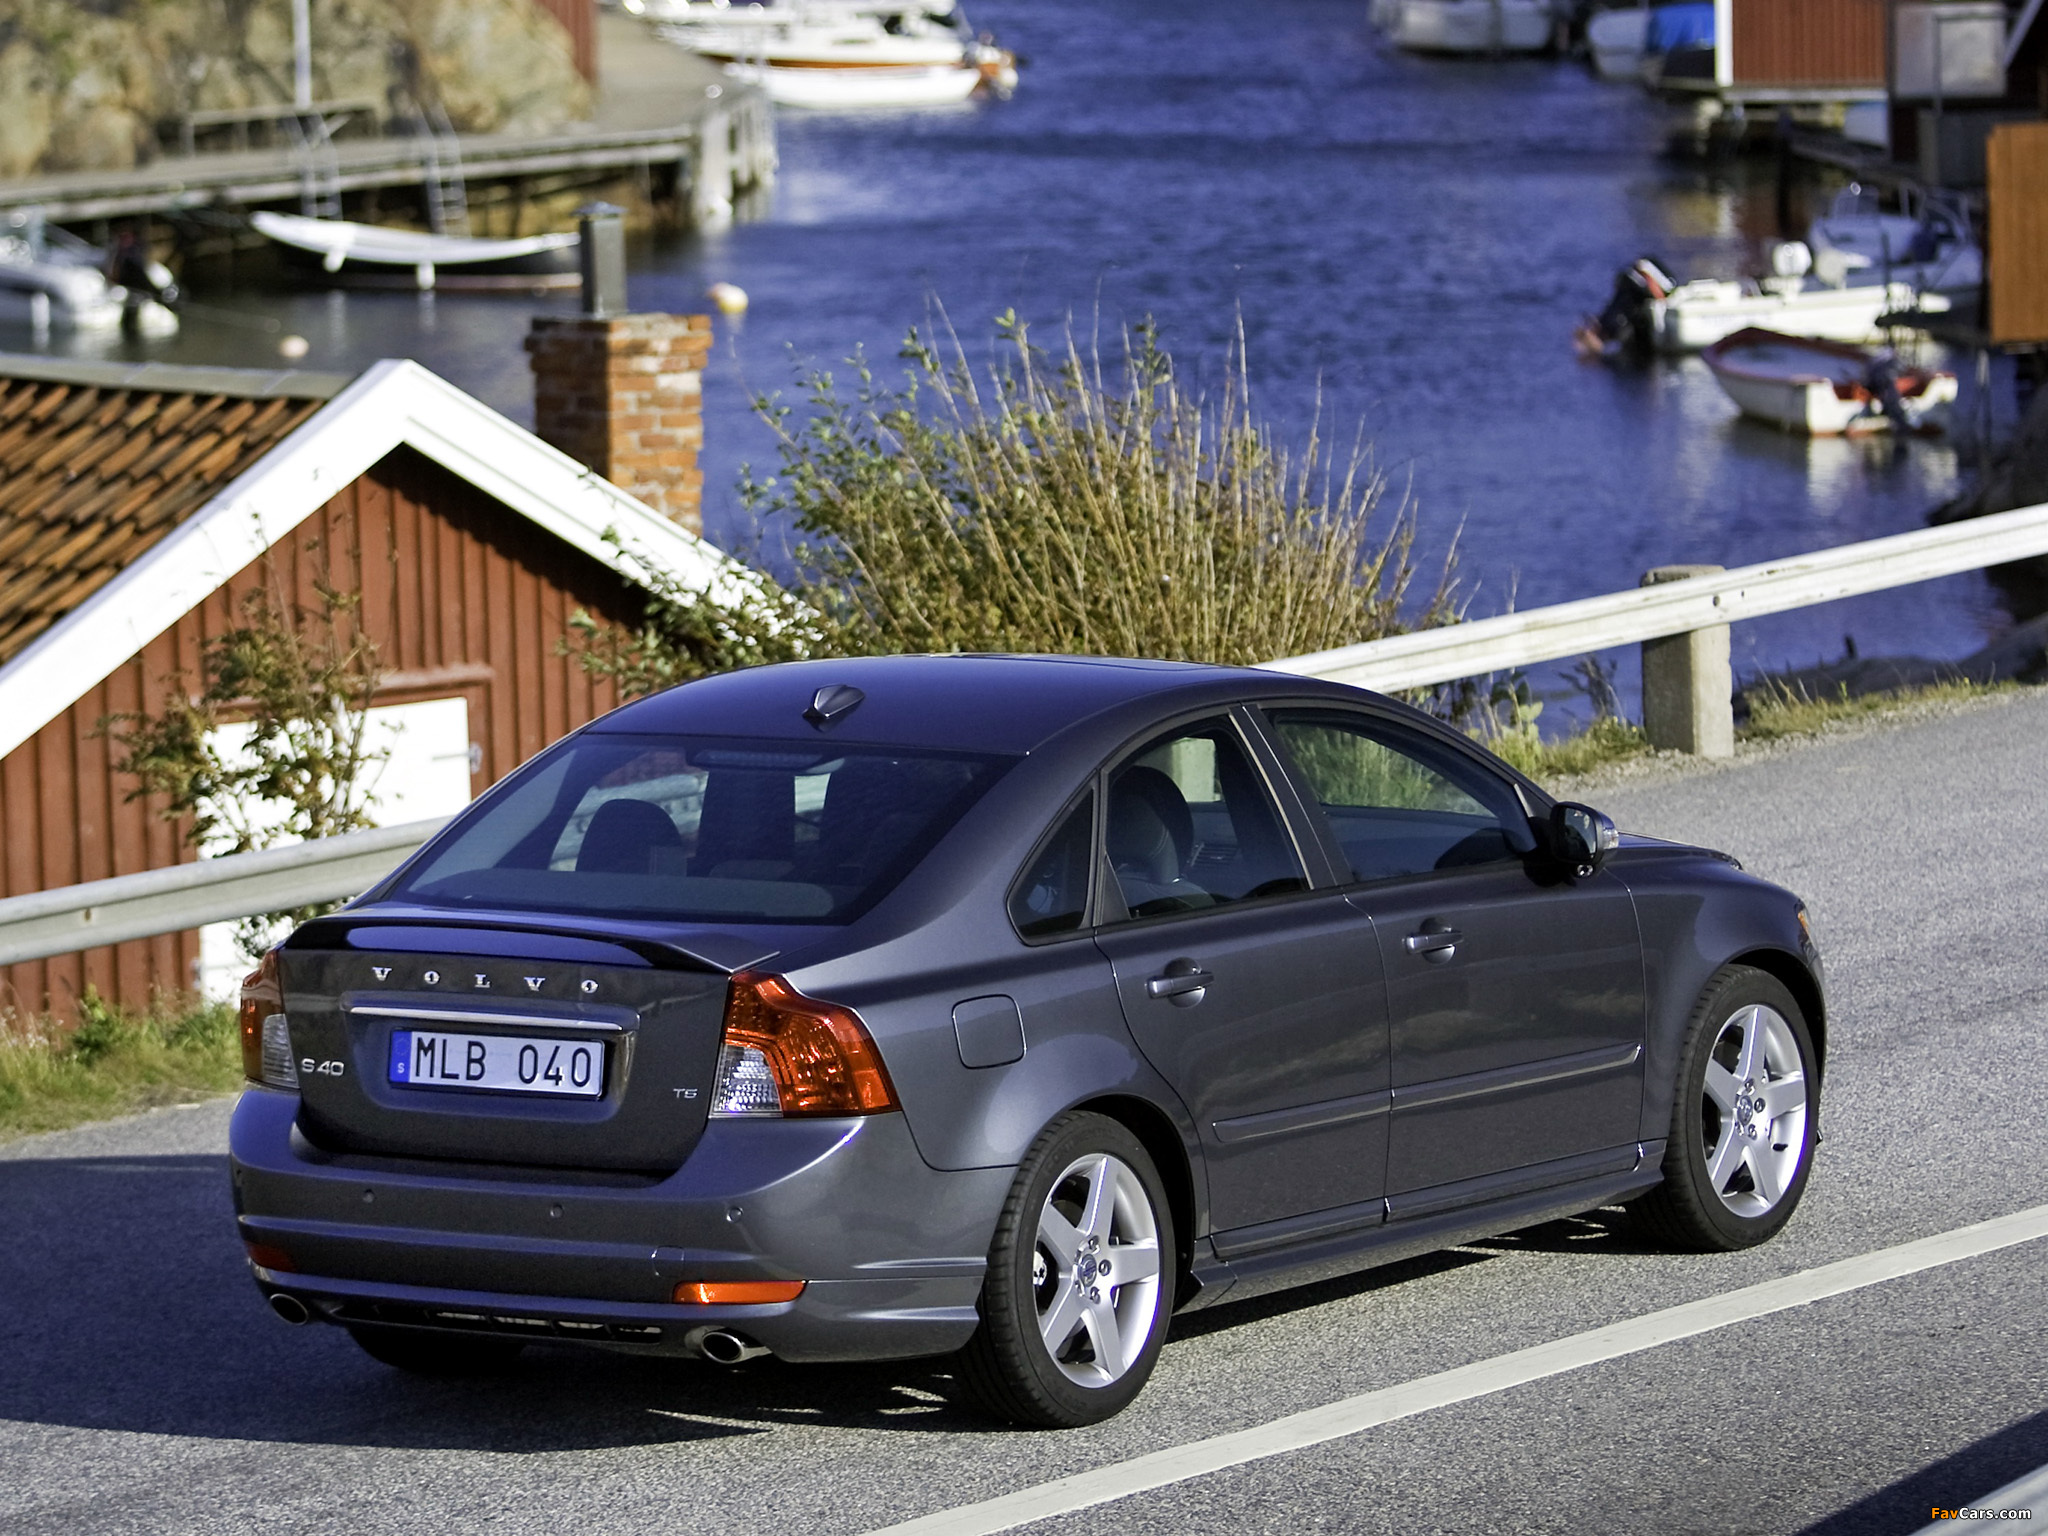 Images of Volvo S40 RDesign 200809 (2048x1536)